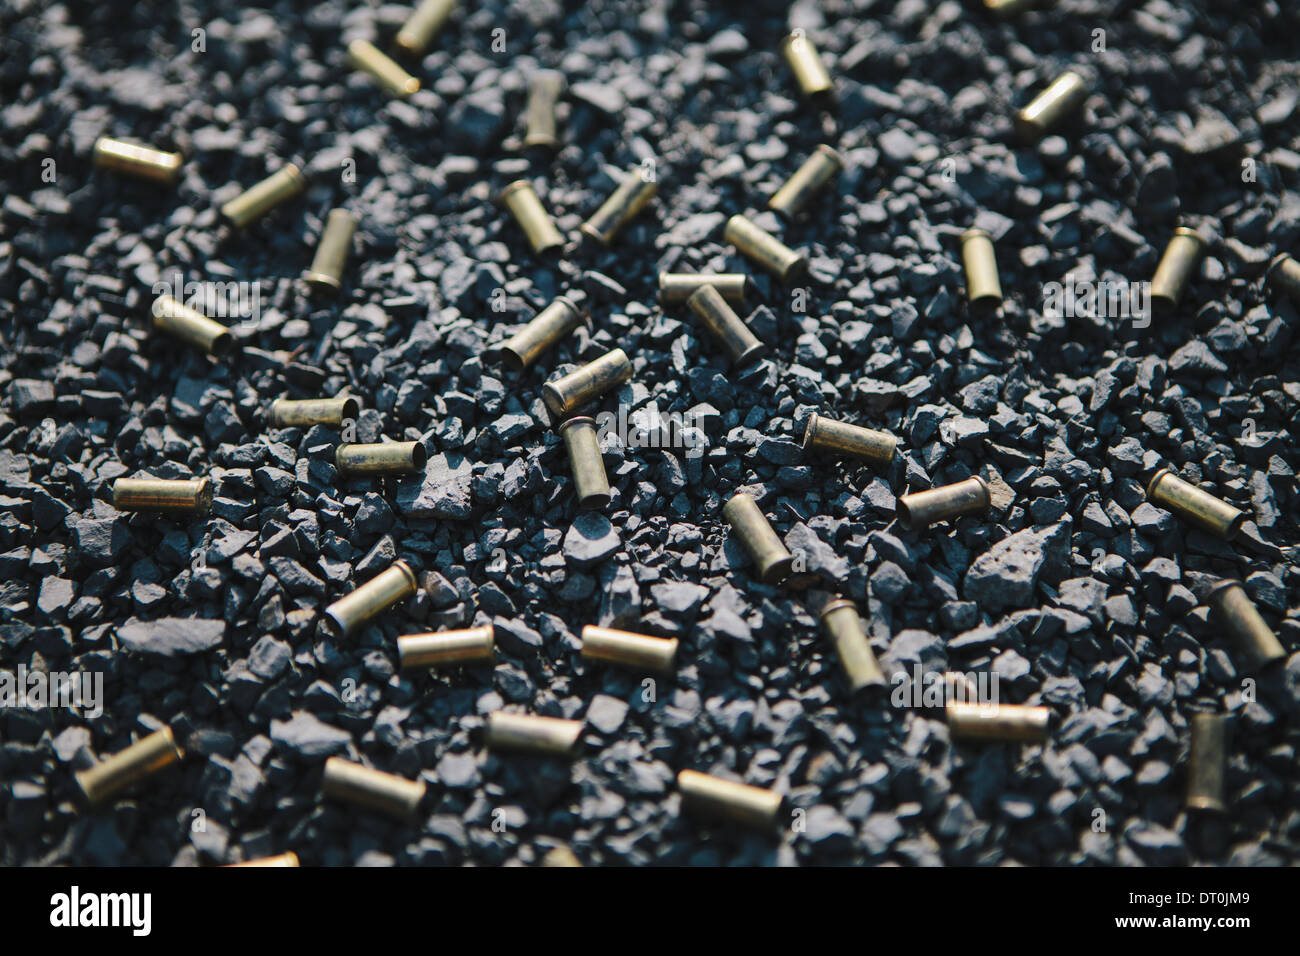 Washington state USA Discarded bullet shells on the ground Stock Photo